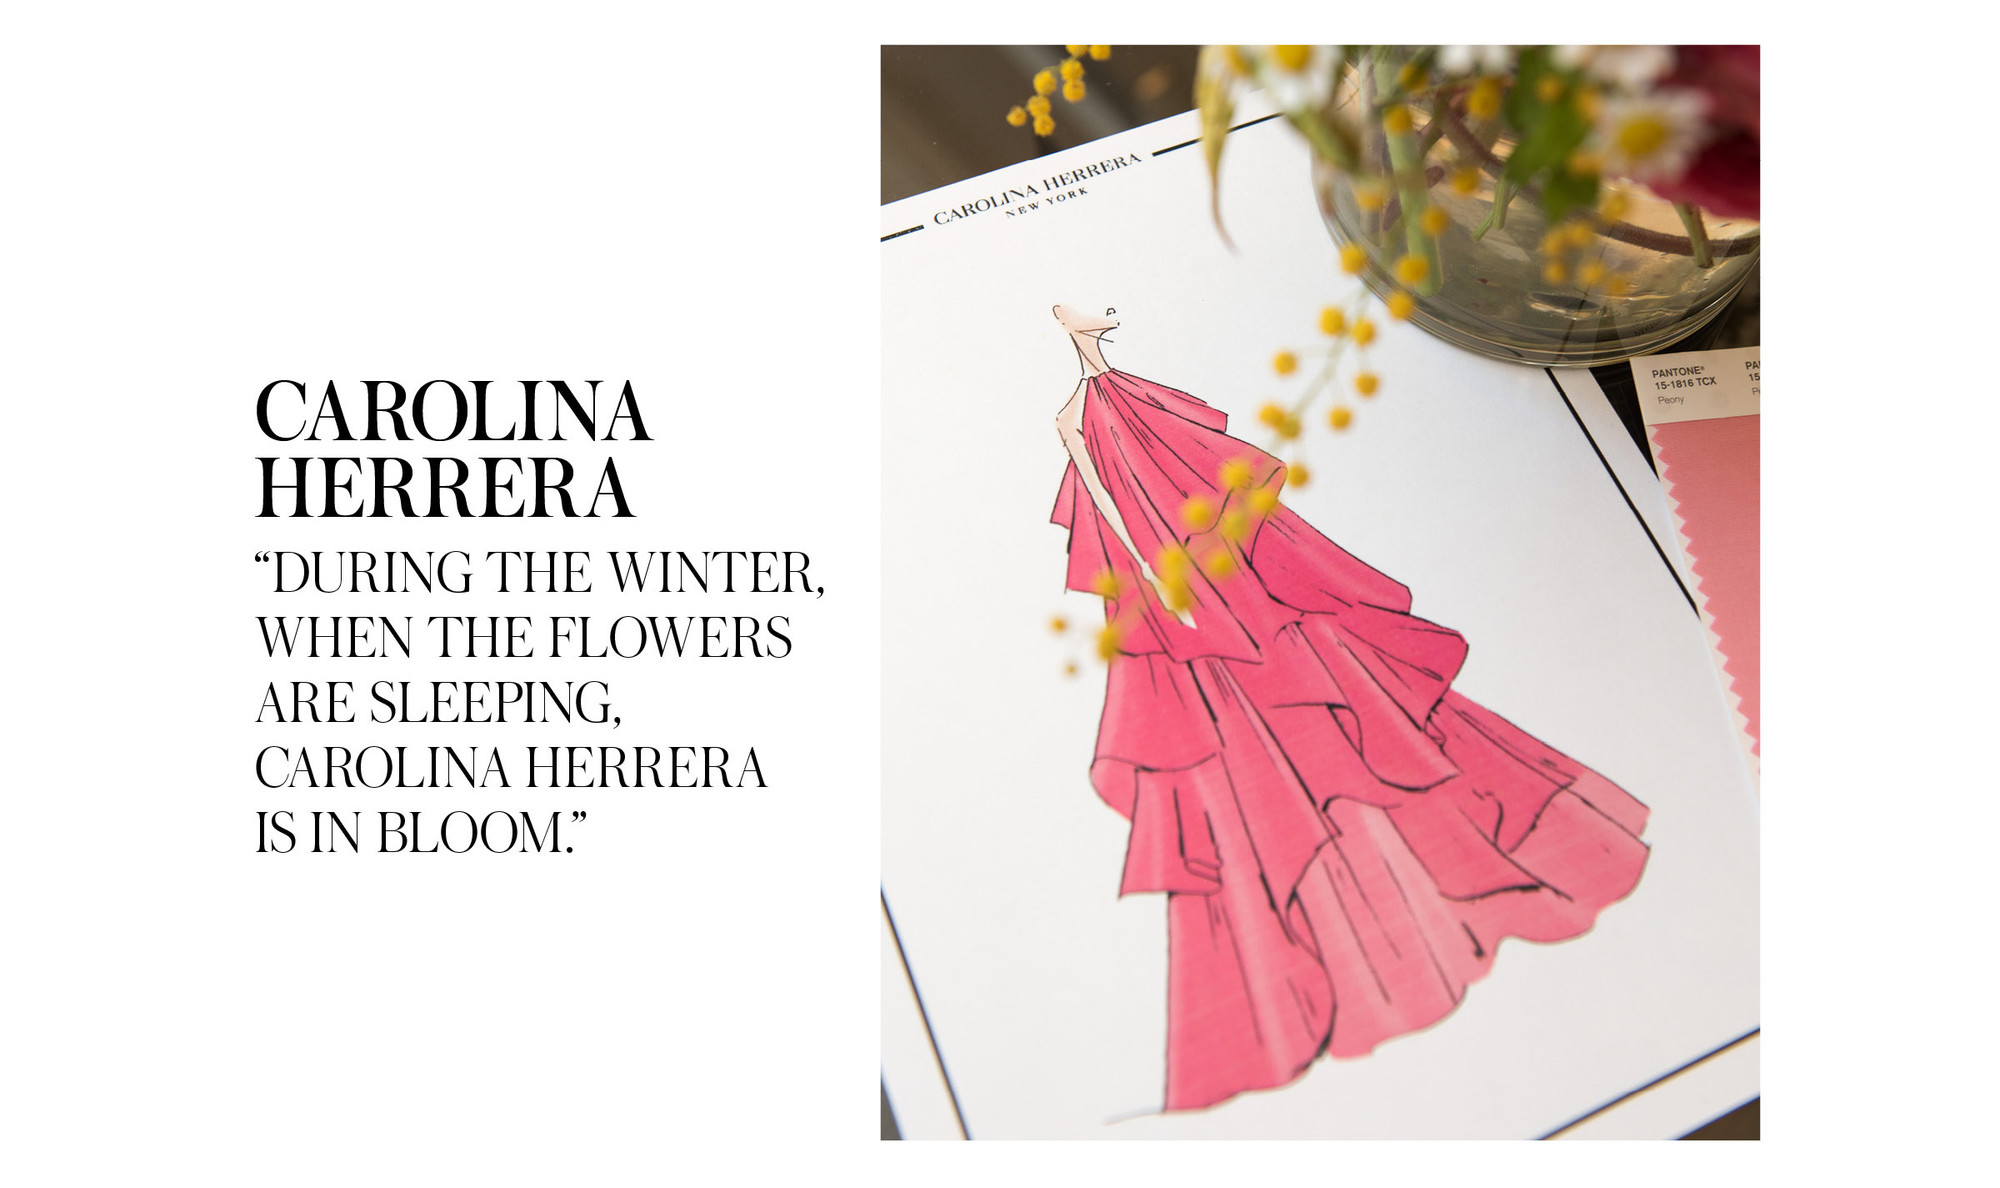 Carolina Herrera Fall/ Winter 2019 collection at Moda Operandi